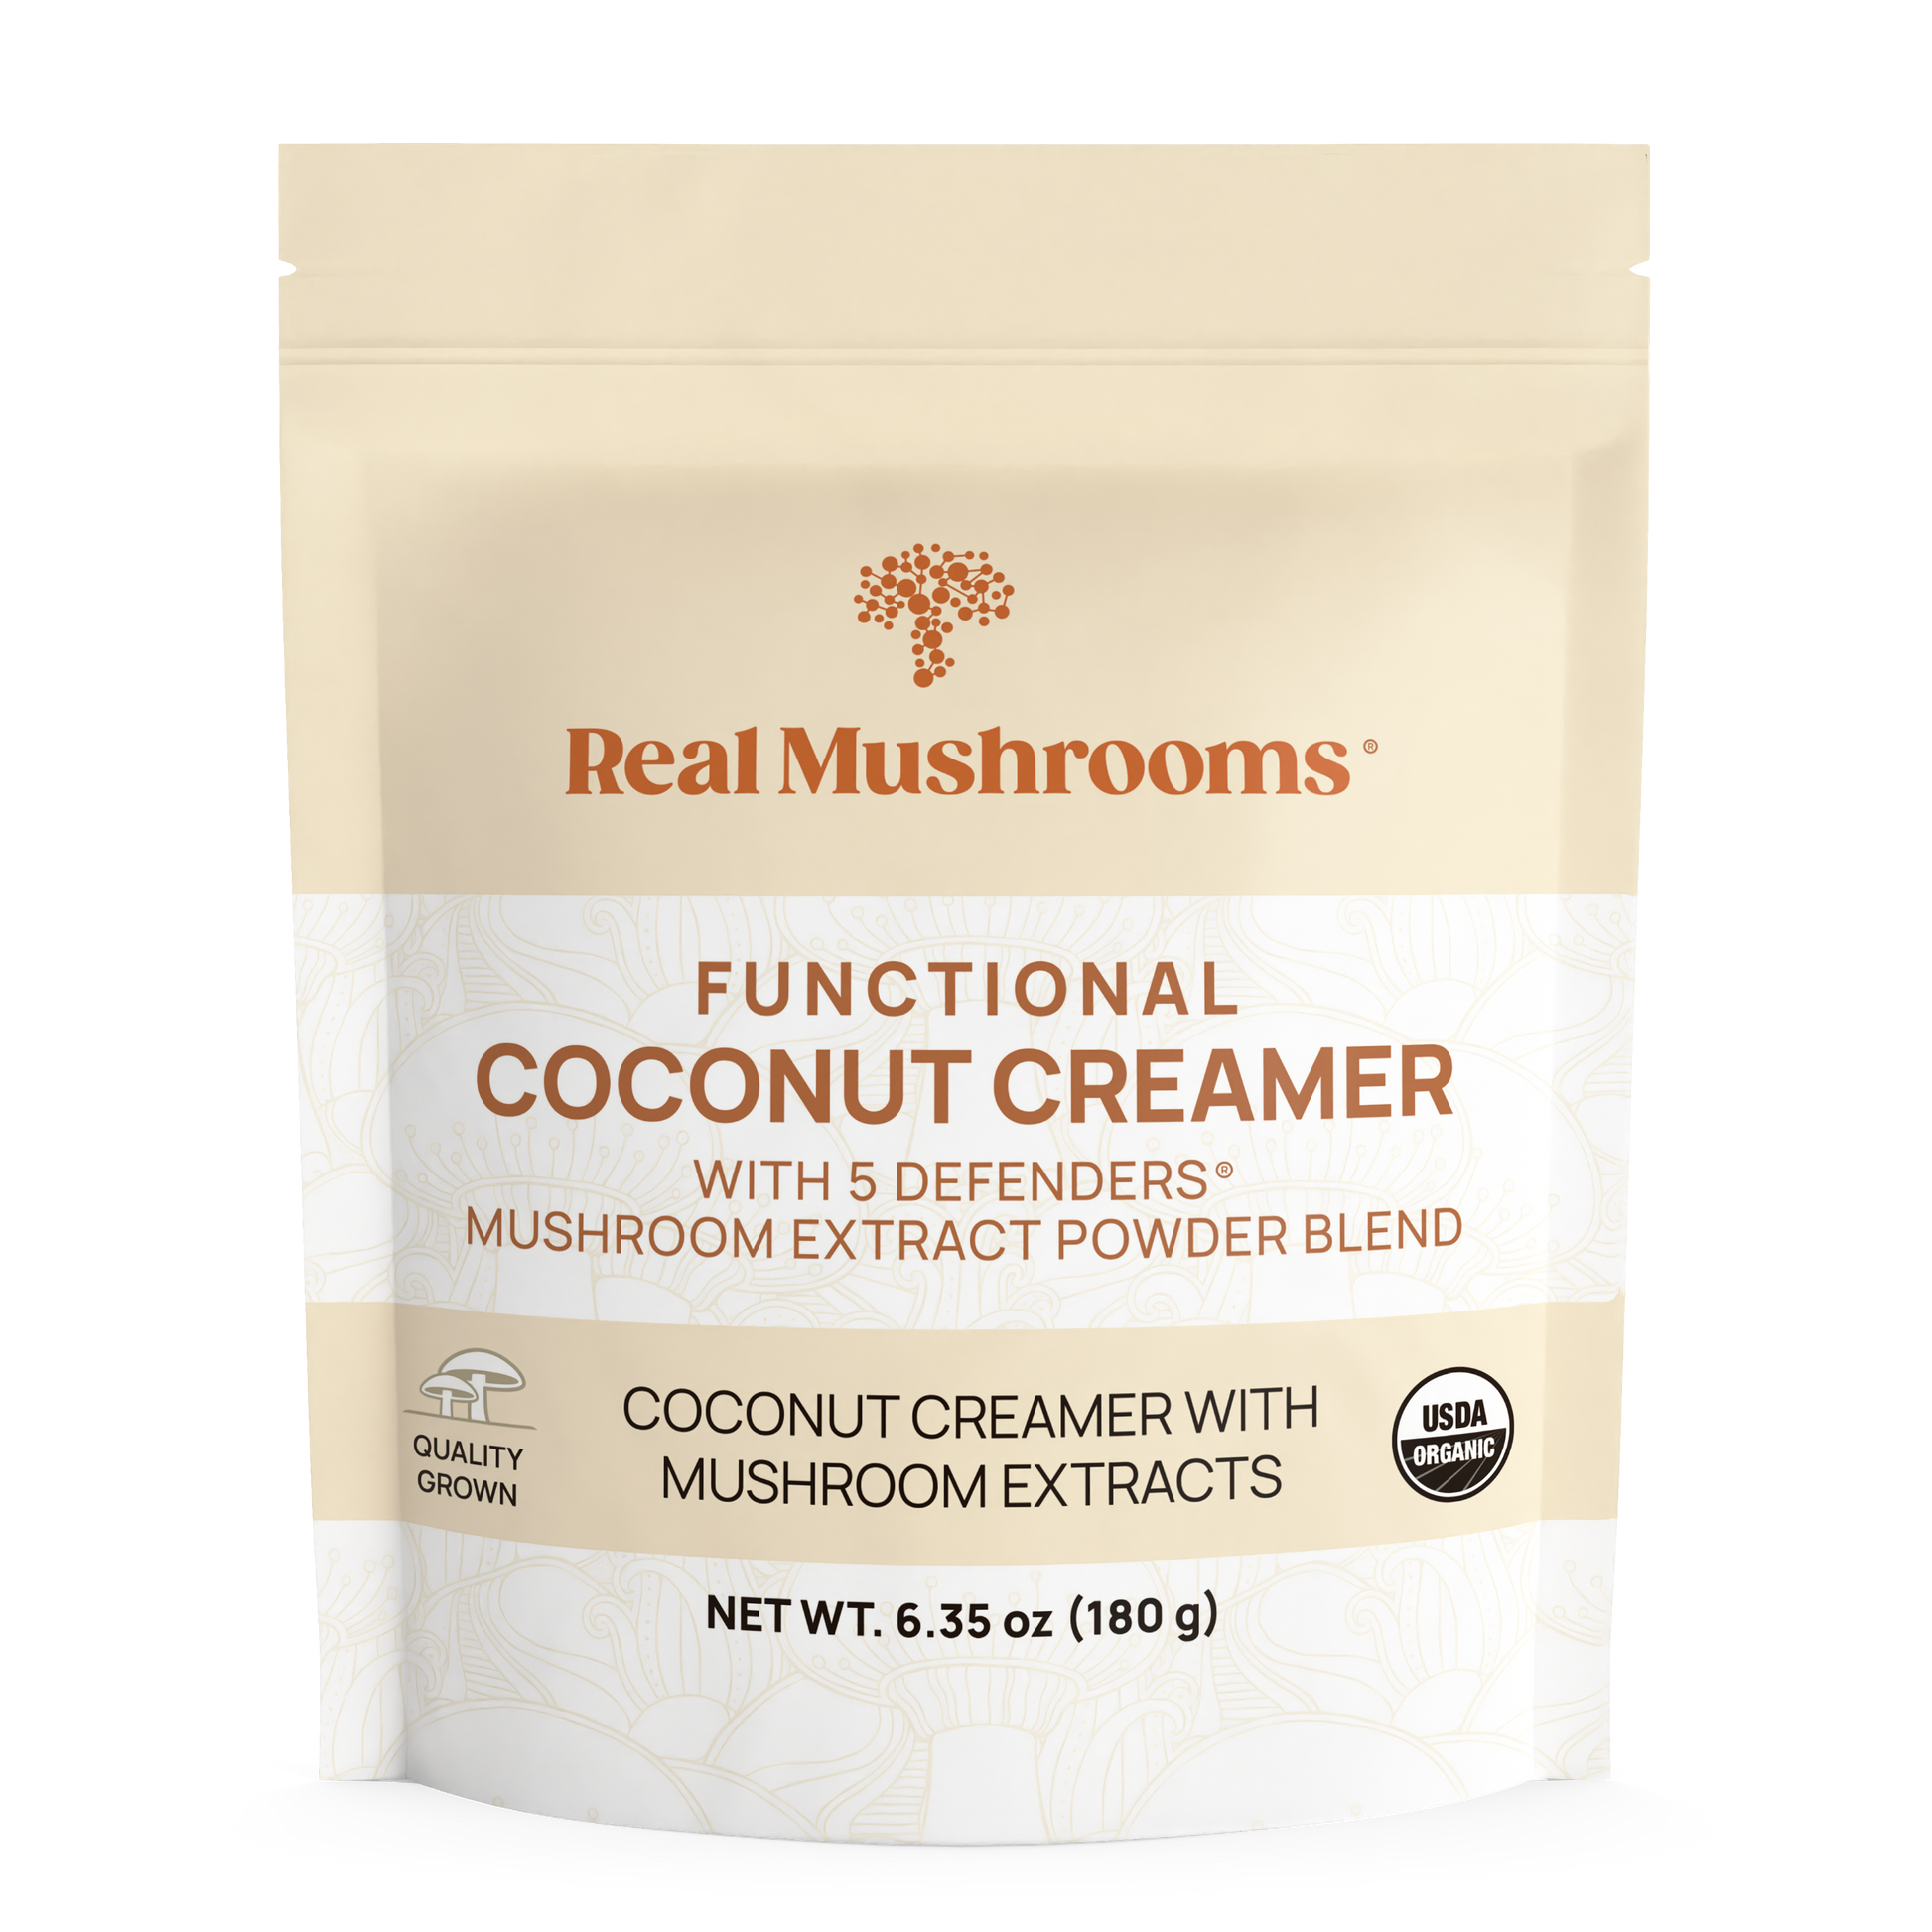 Real Mushrooms Functional Coconut Creamer - Powder